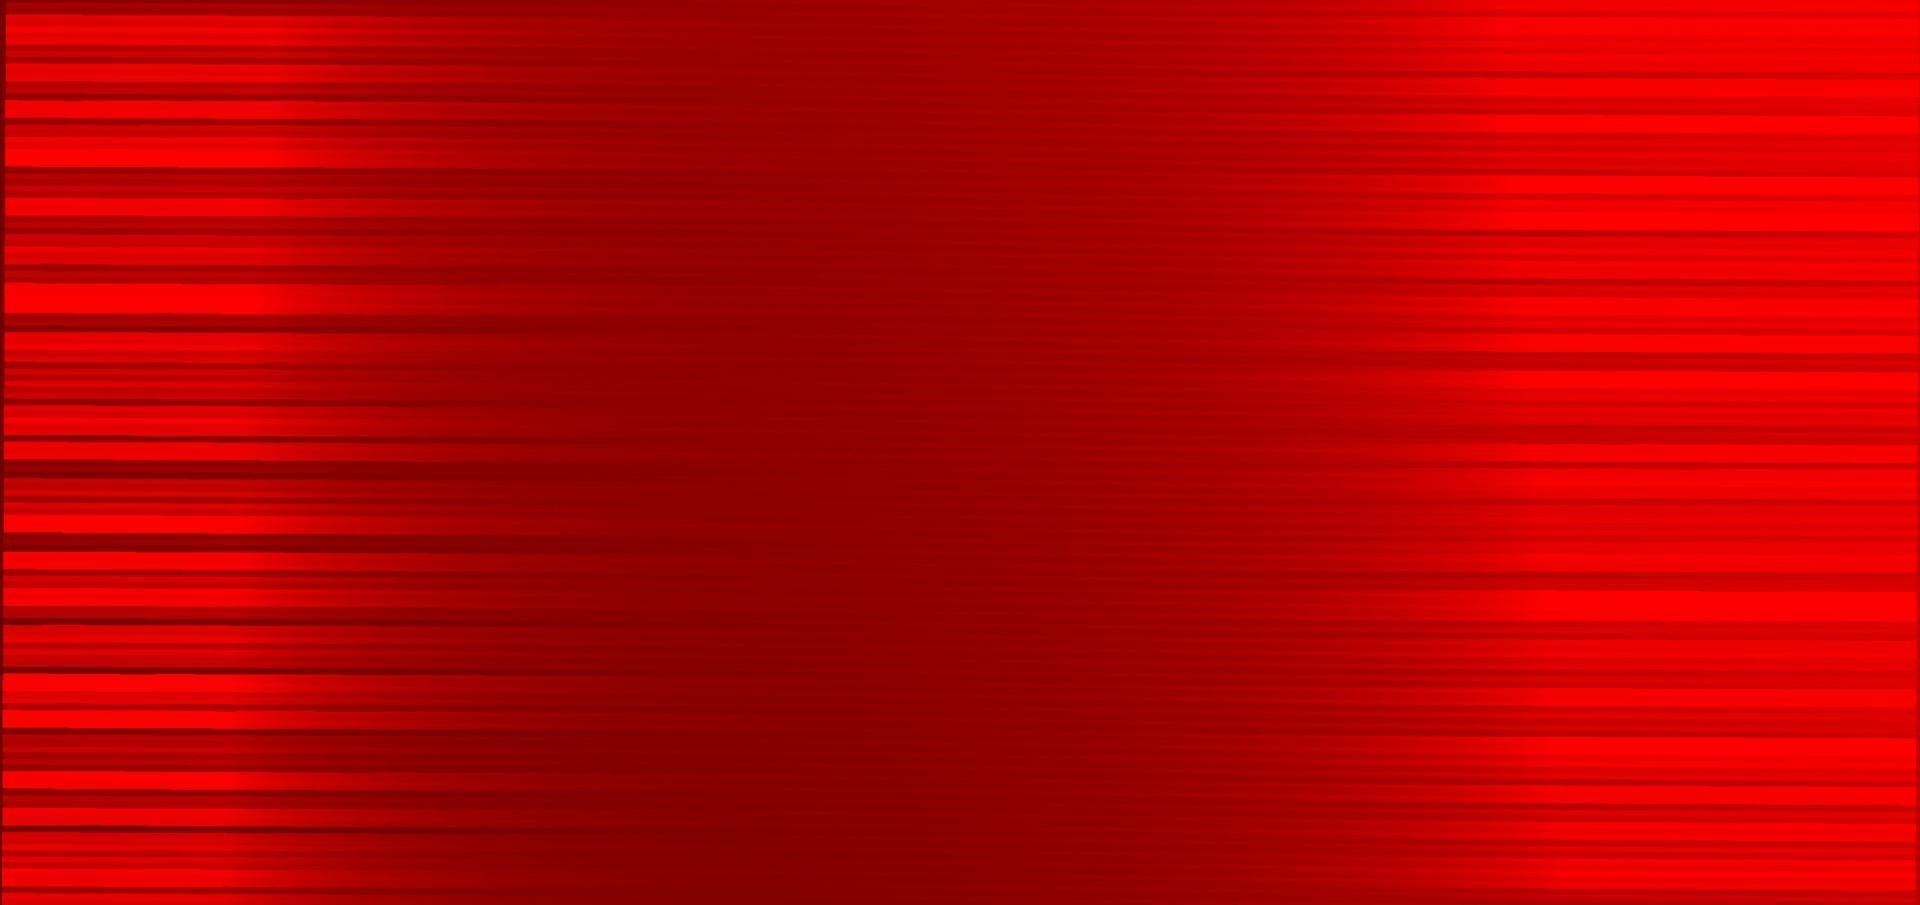 abstrakt horisontellt linjemönster på röd bakgrund. vektor